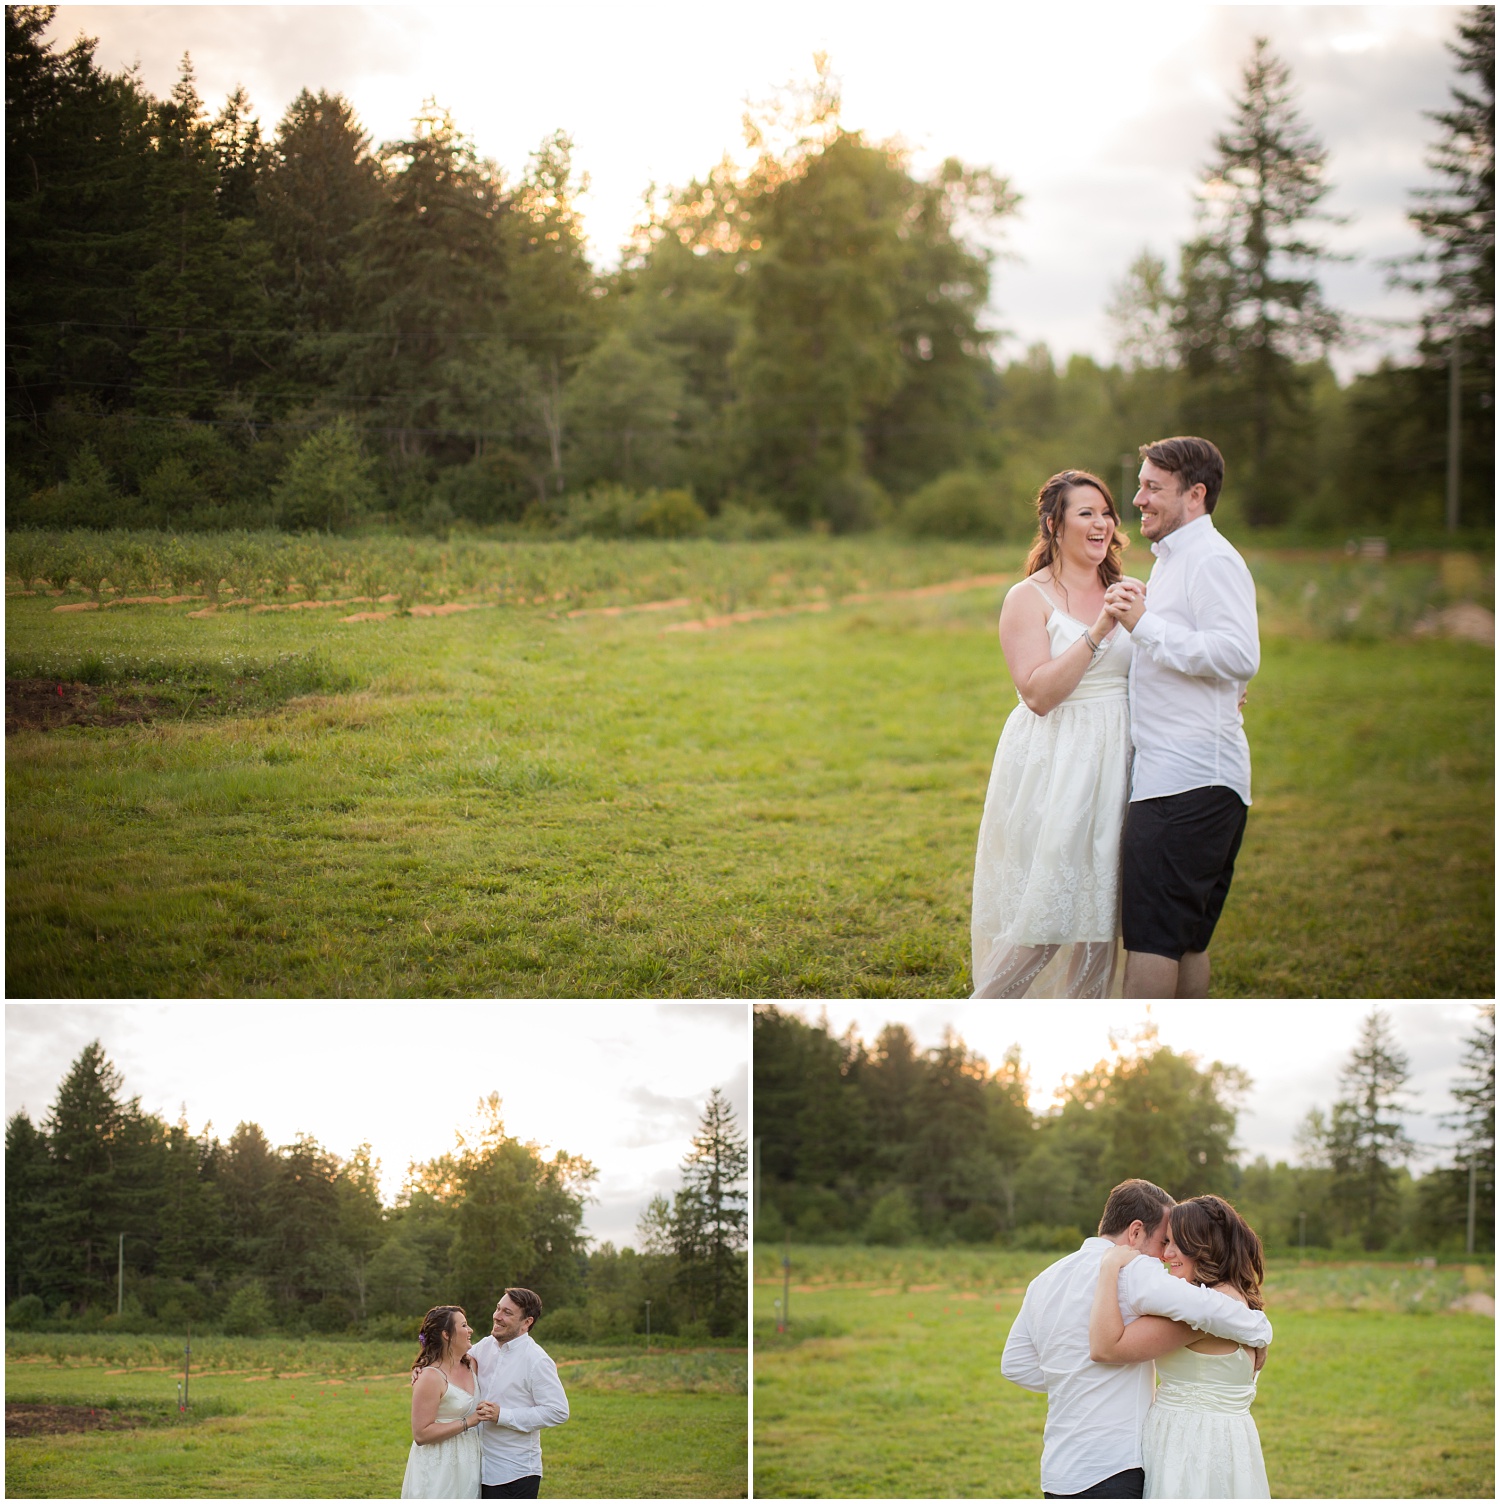 Amazing Day Photography - Courtney Wedding Photographer - Farm Wedding - Backyard Wedding - Langley Wedding Photographer (12).jpg